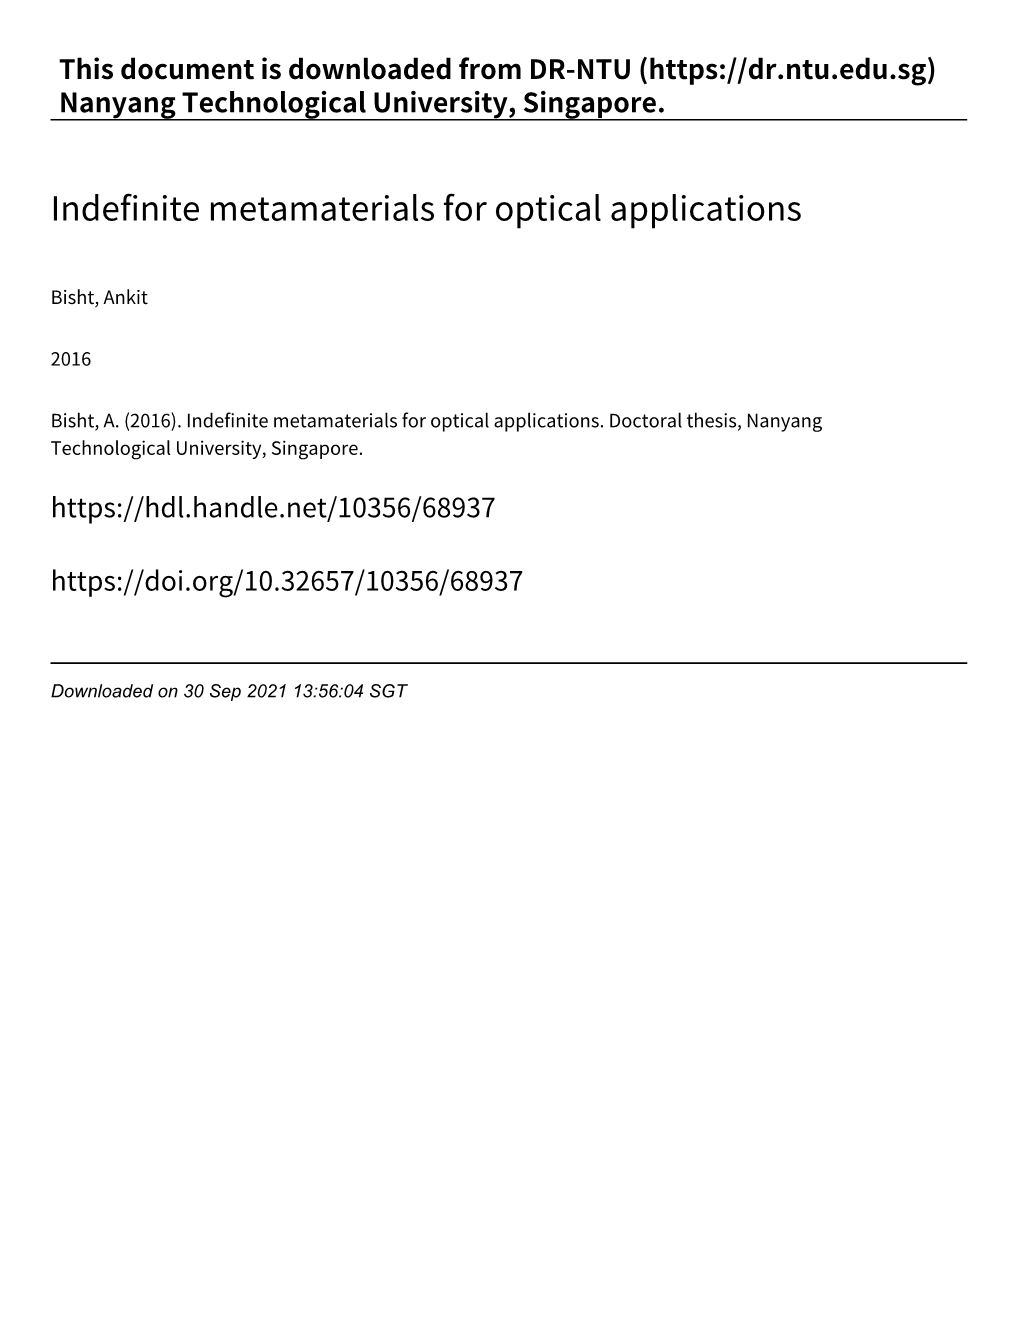 Indefinite Metamaterials for Optical Applications